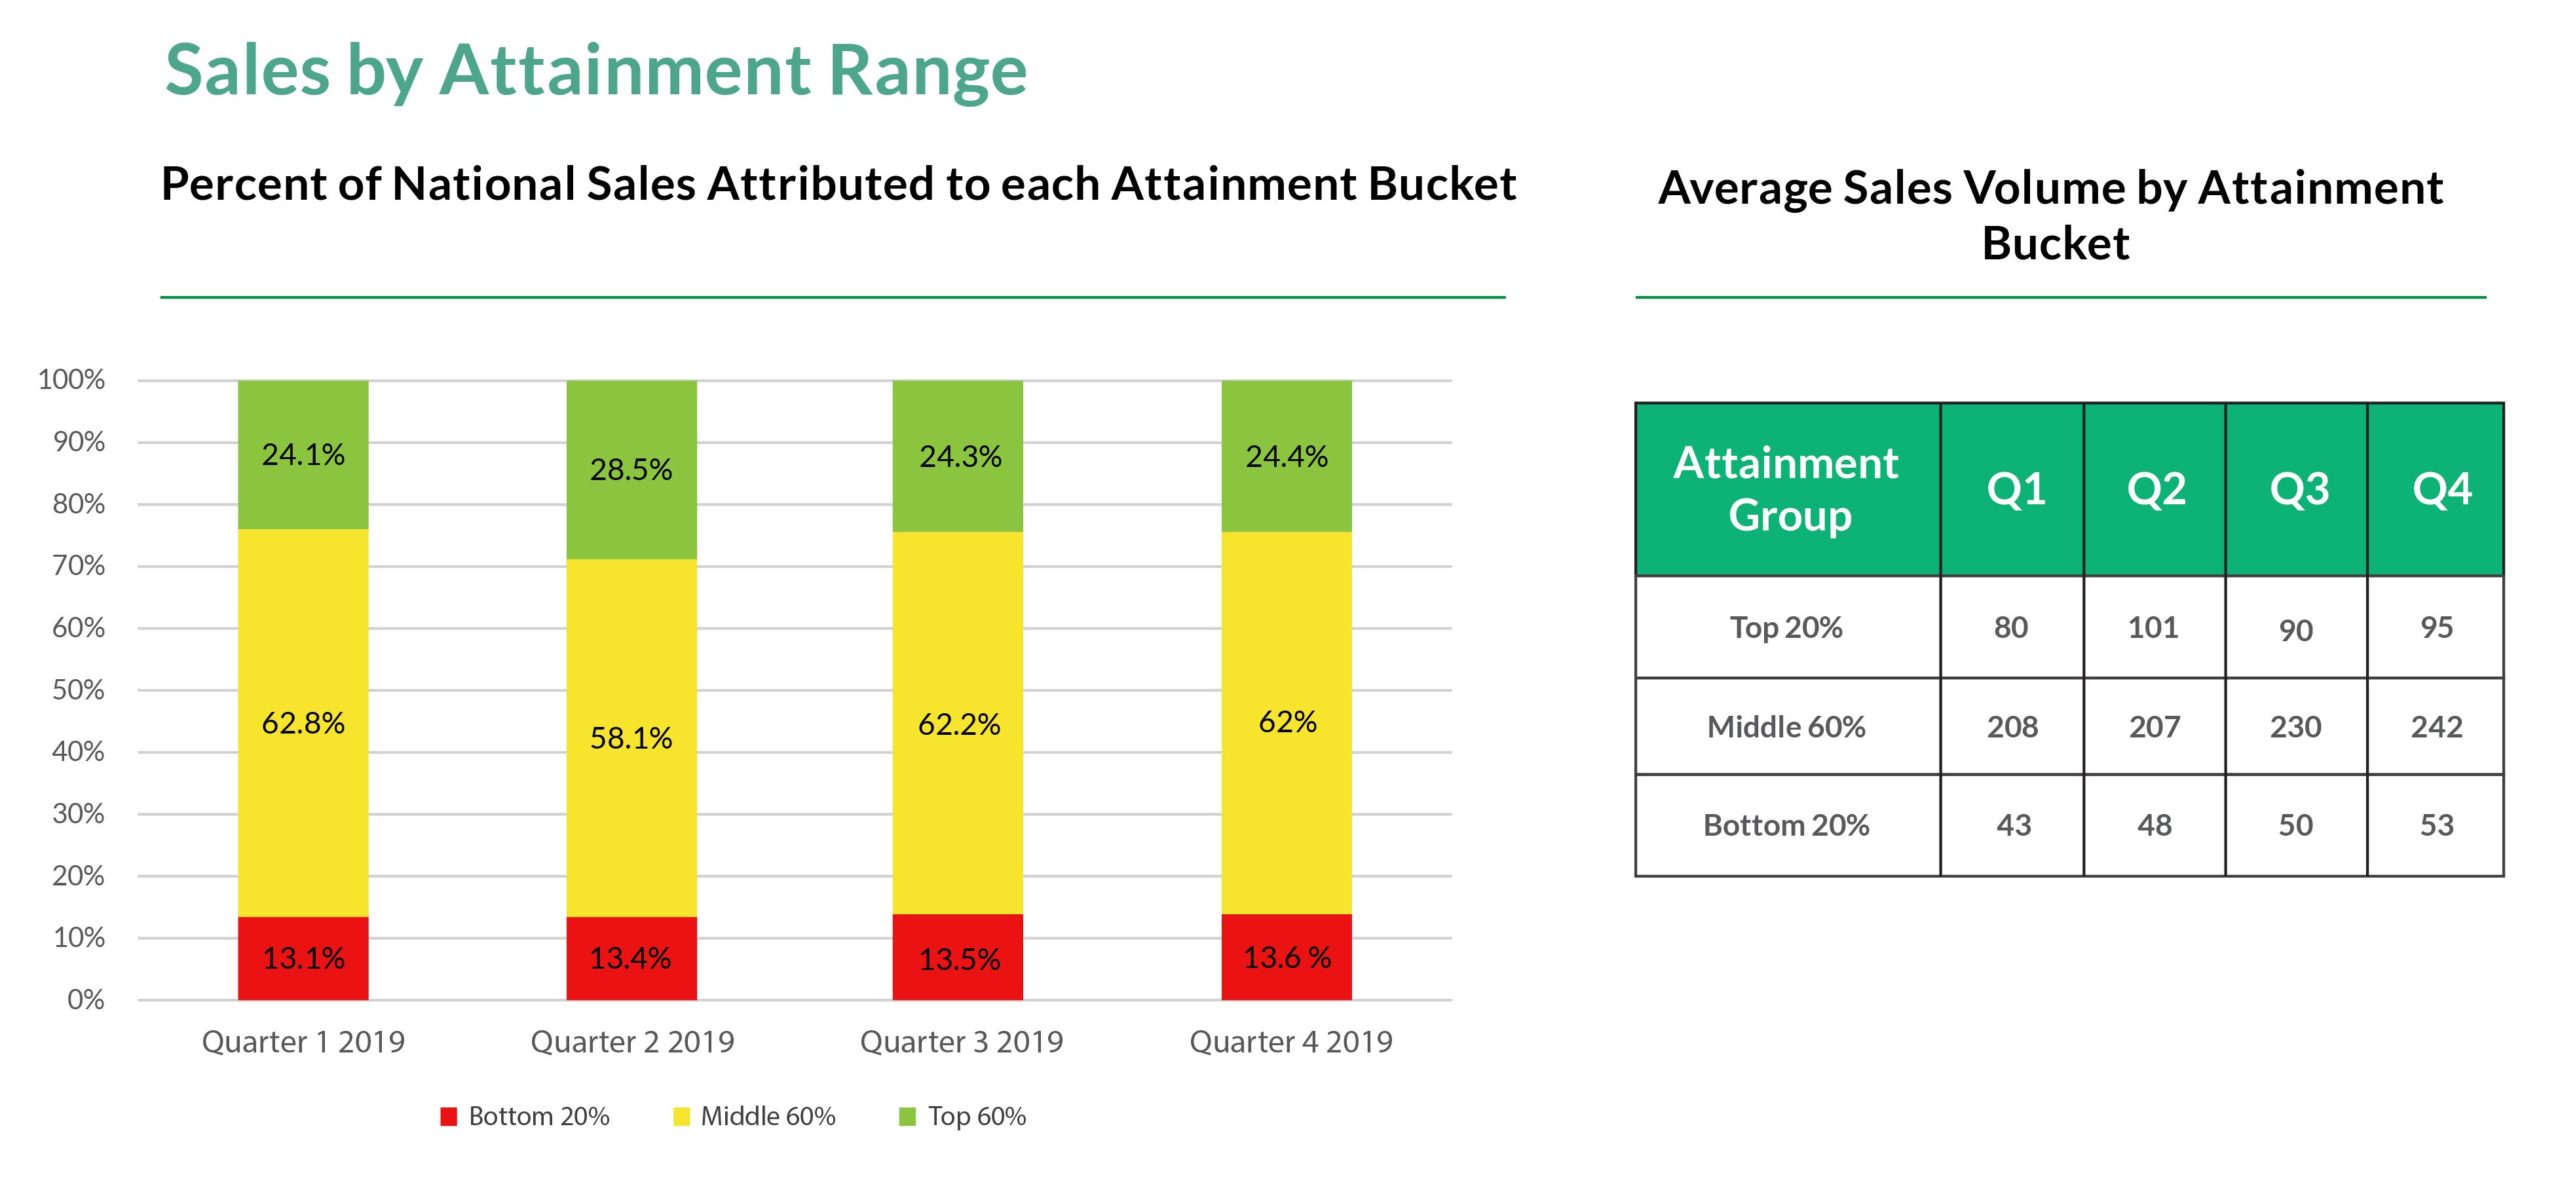 Sales by Attainment Range